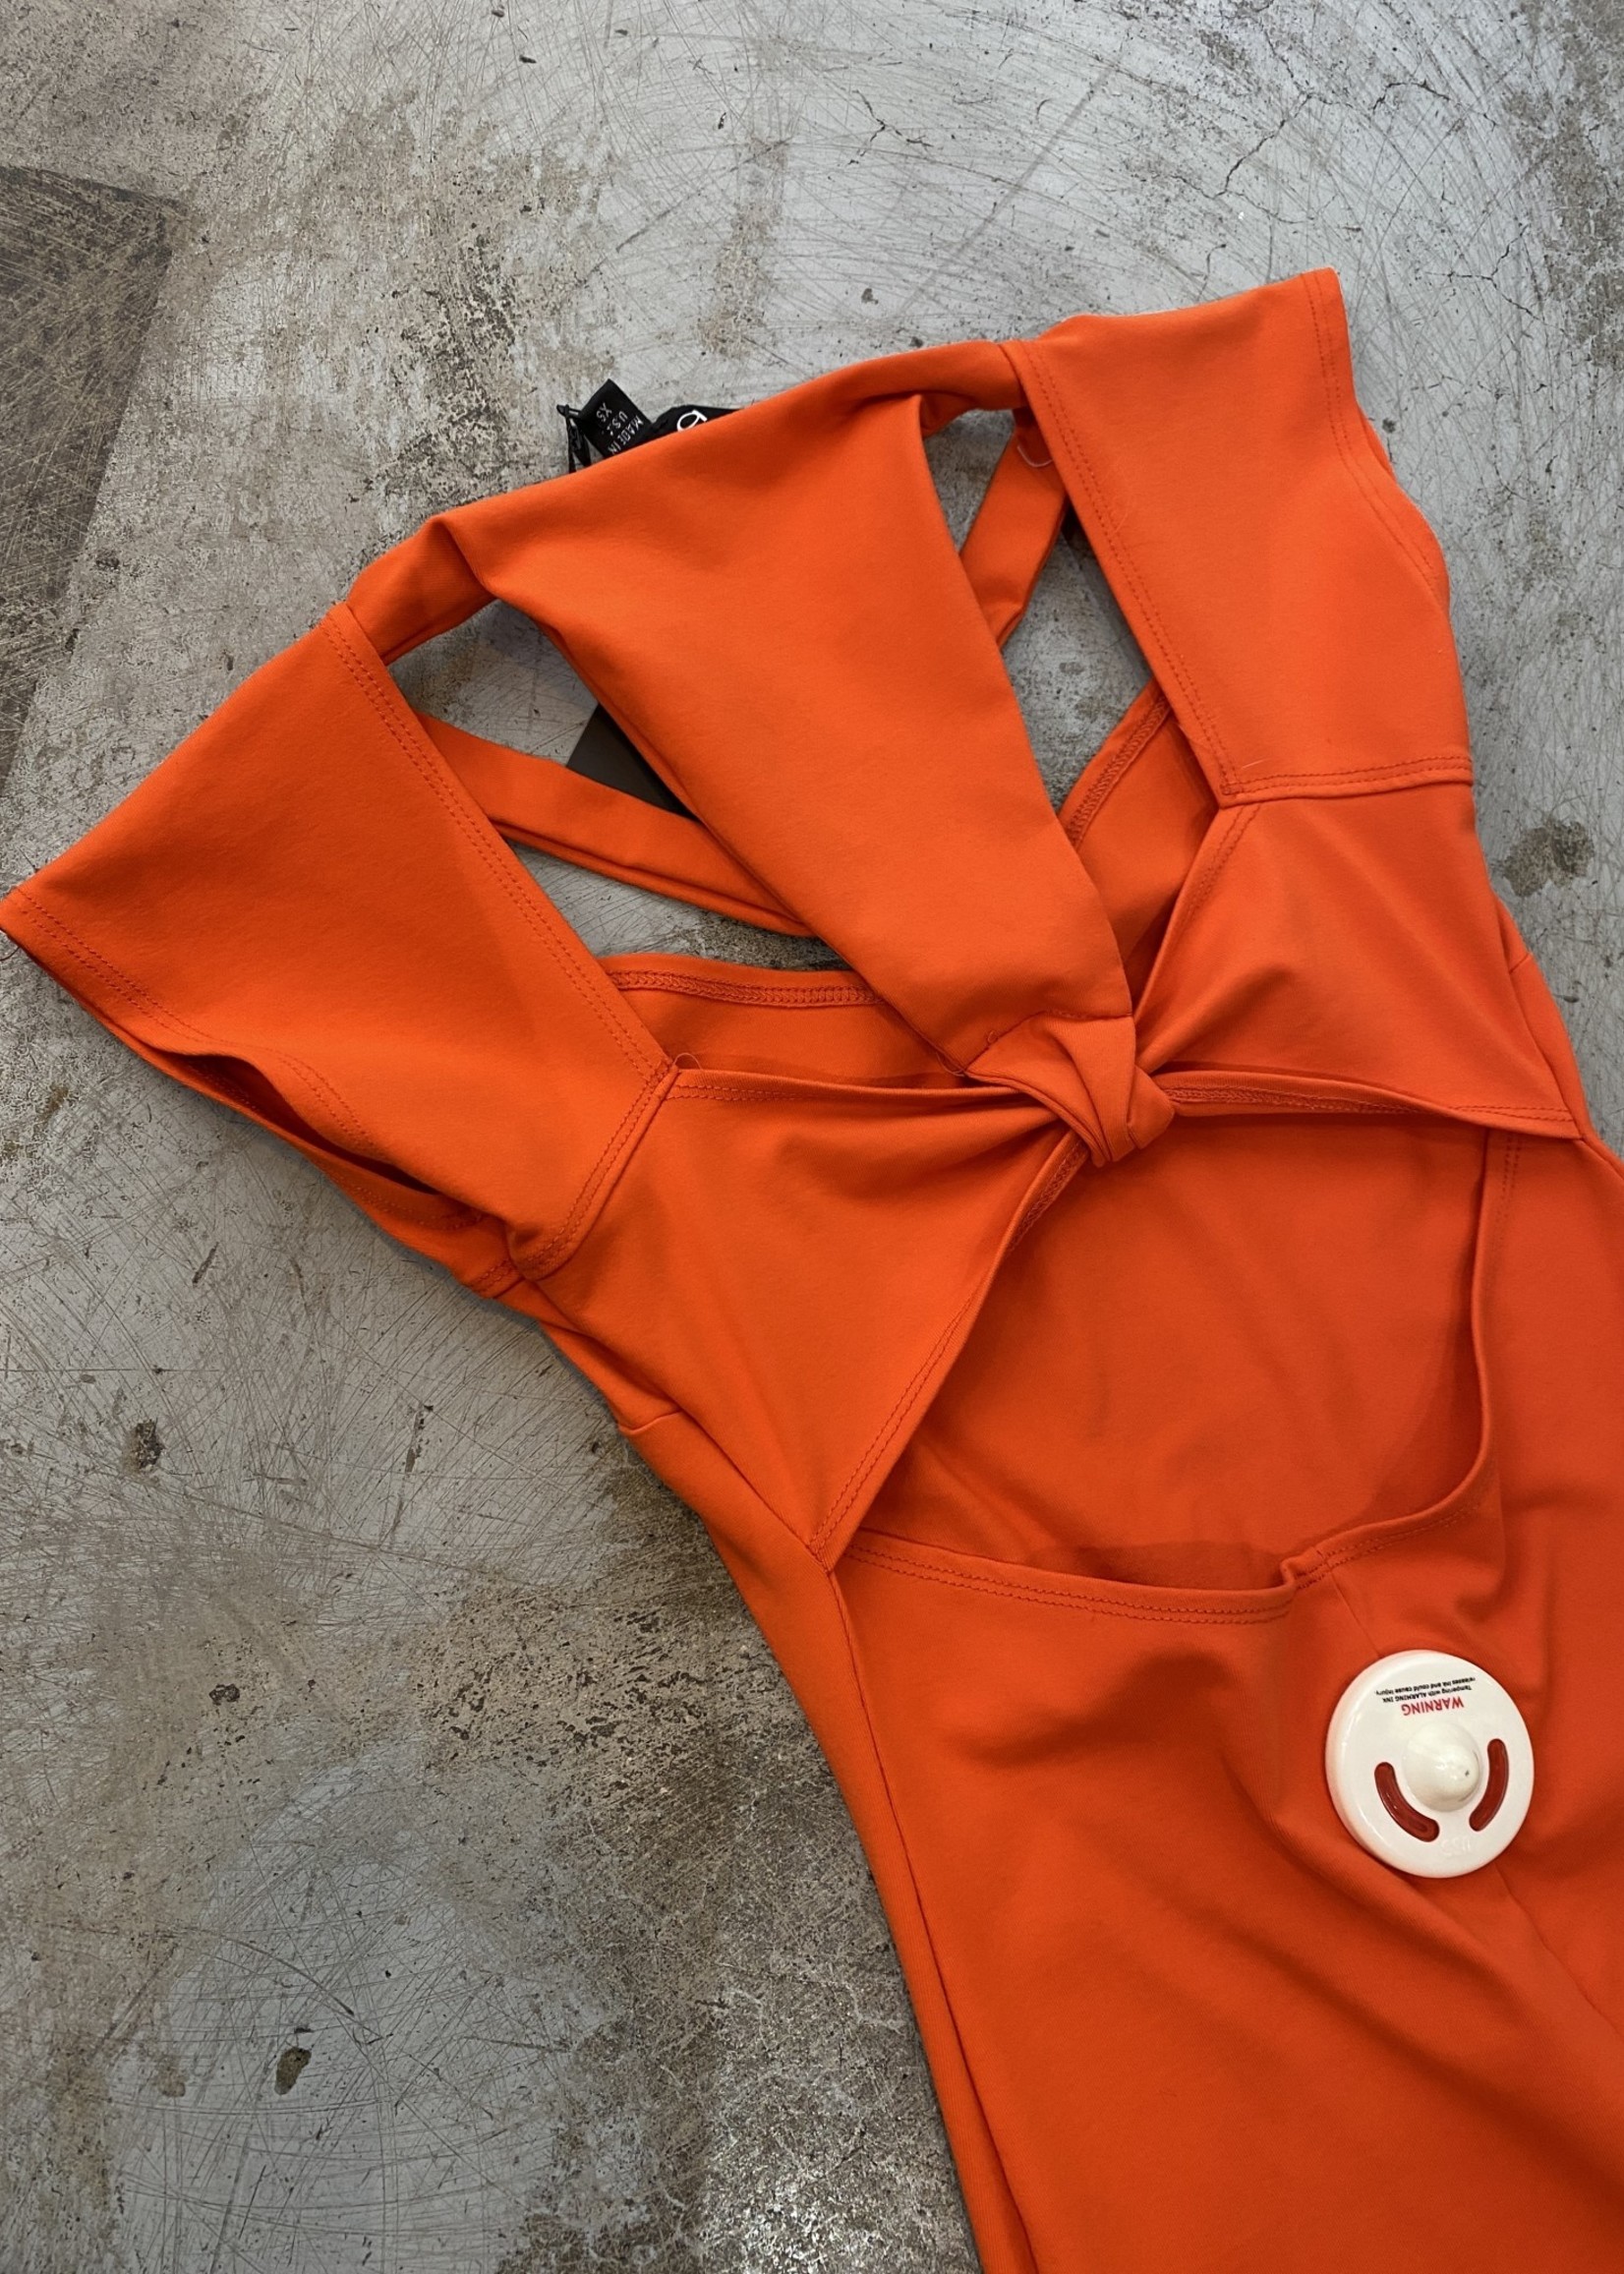 Bebe Y2K Orange Bodycon Dress XS